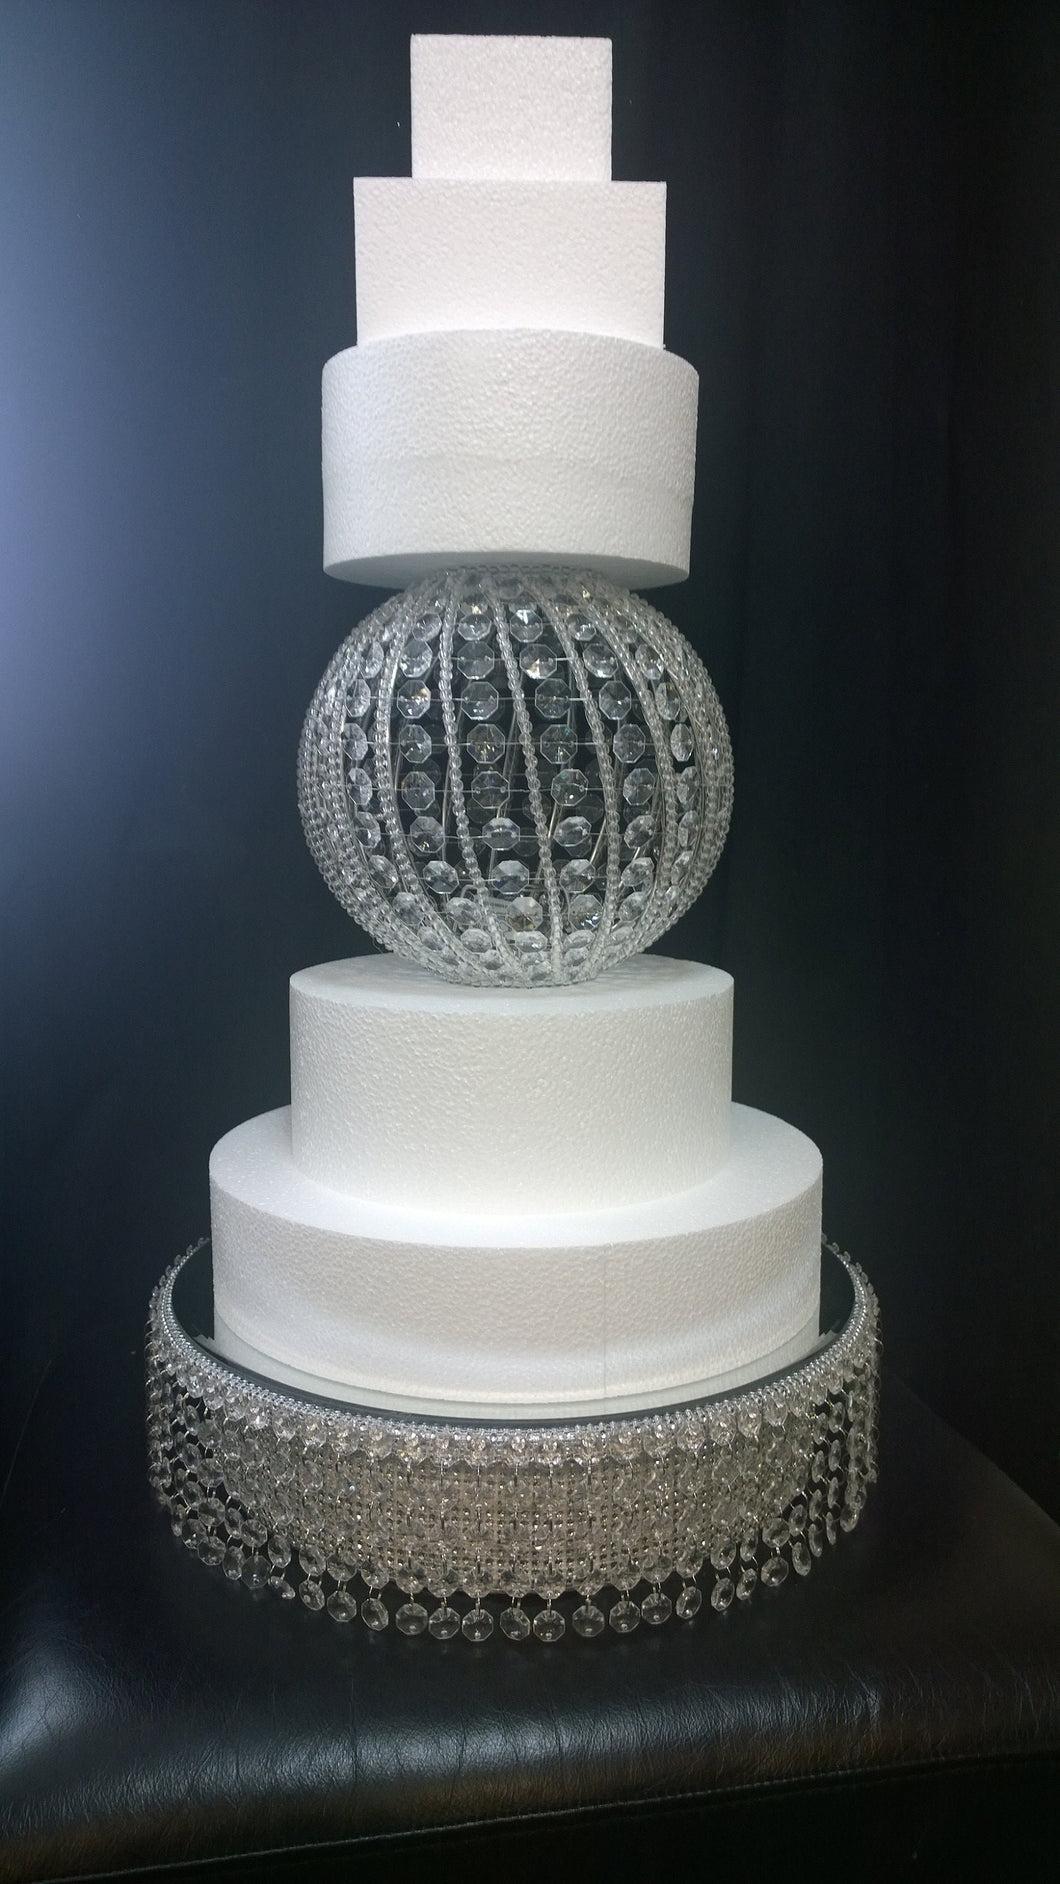 Crystal BALL SPIRAL SPHERE cake separator, divider by Crystal wedding uk